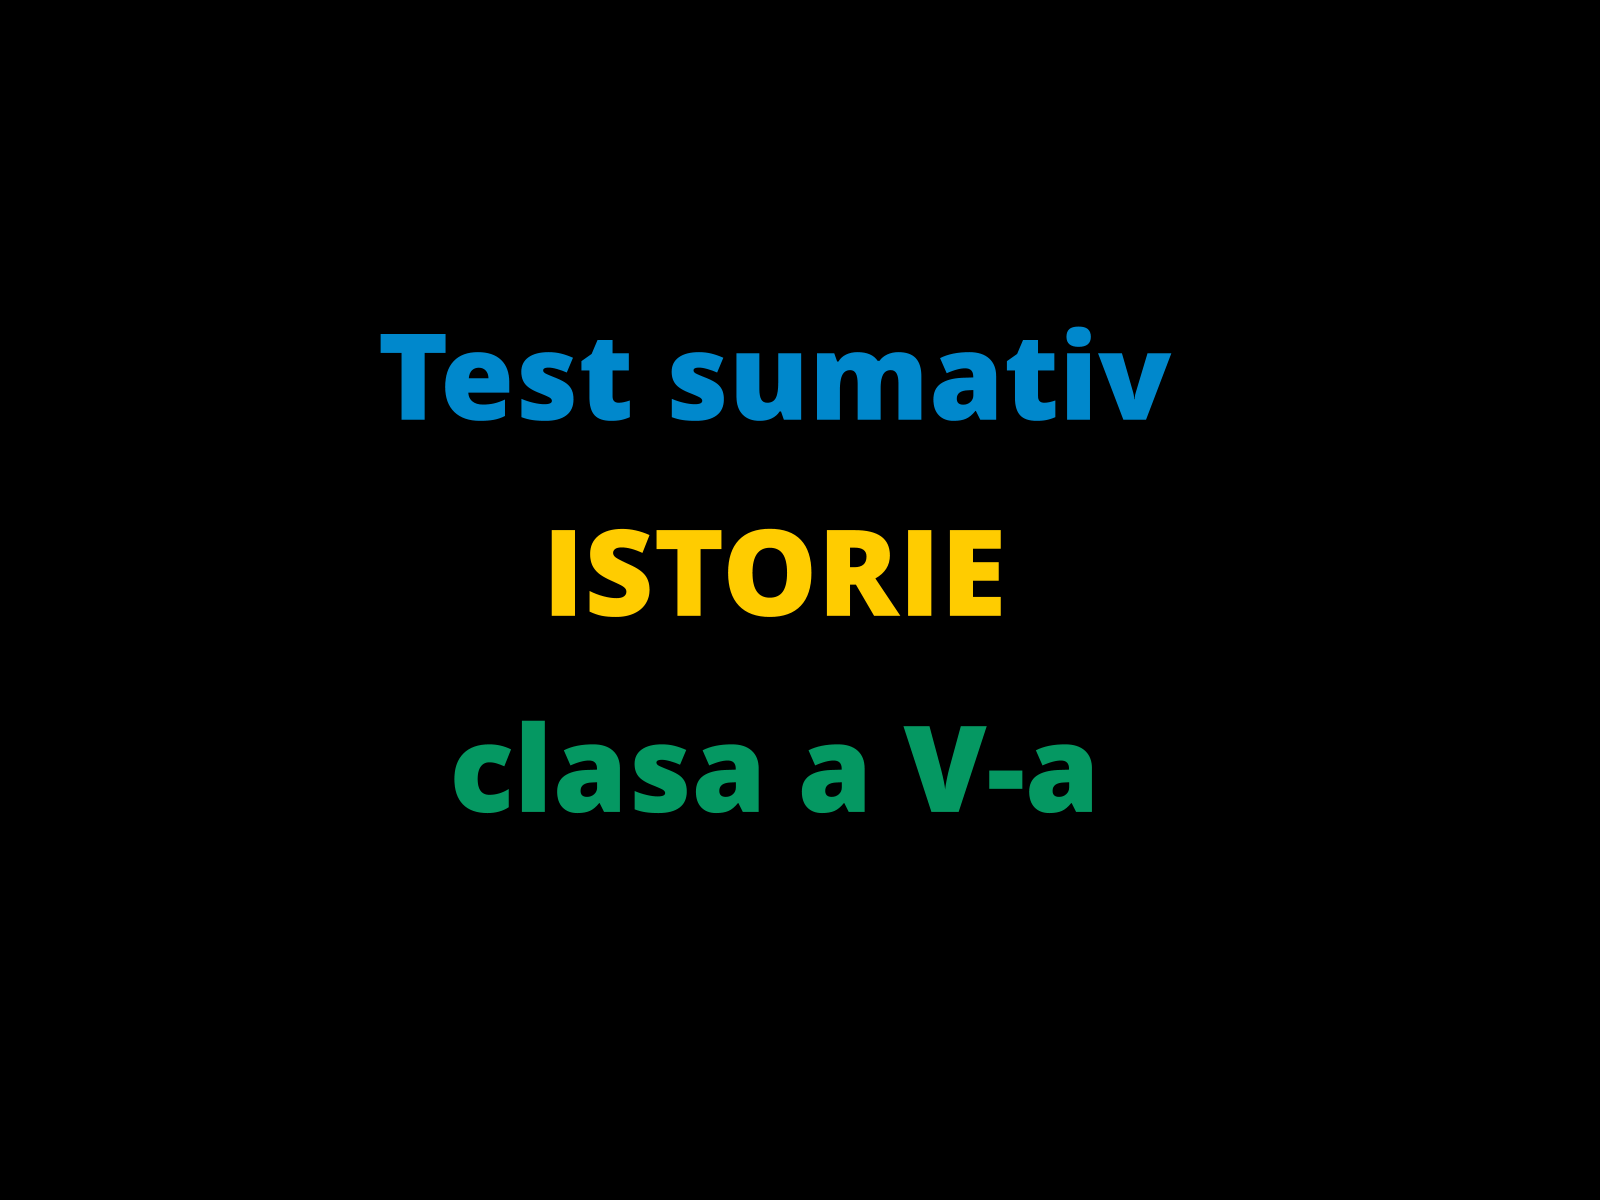 Geto-dacii (test sumativ la disciplina istorie pentru clasa a V-a)